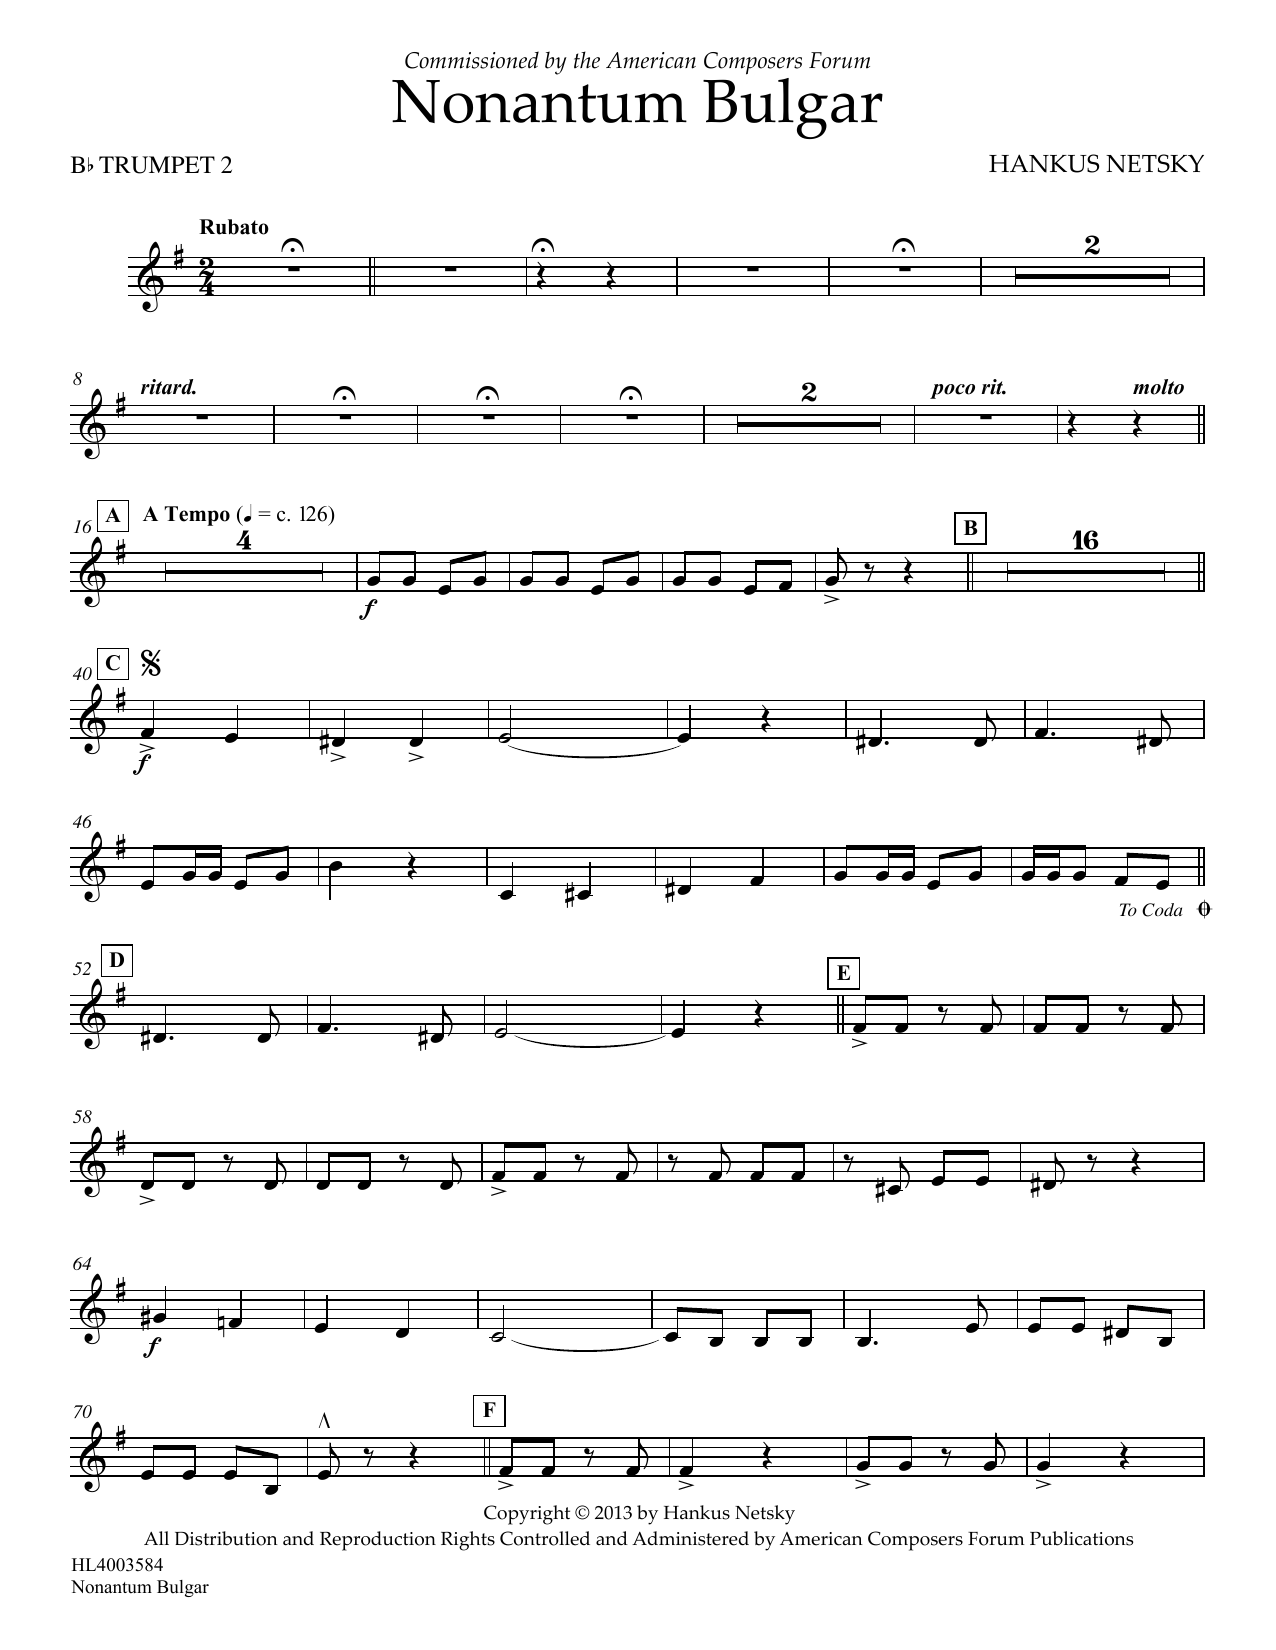 Hankus Netsky Nonantum Bulgar - Bb Trumpet 2 Sheet Music Notes & Chords for Concert Band - Download or Print PDF